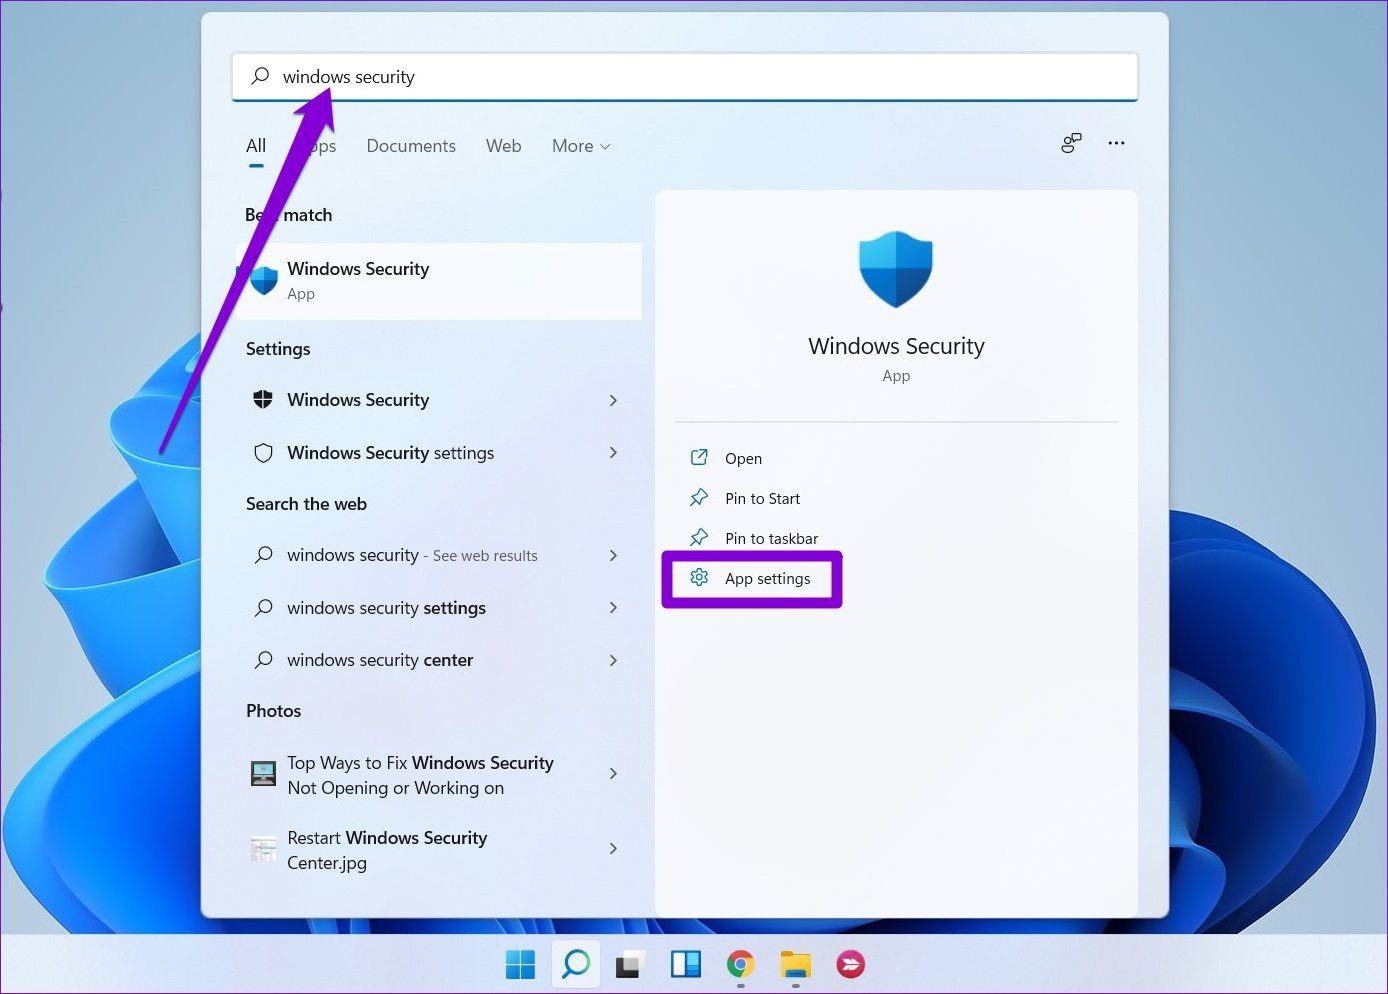 Windows Security App Settings